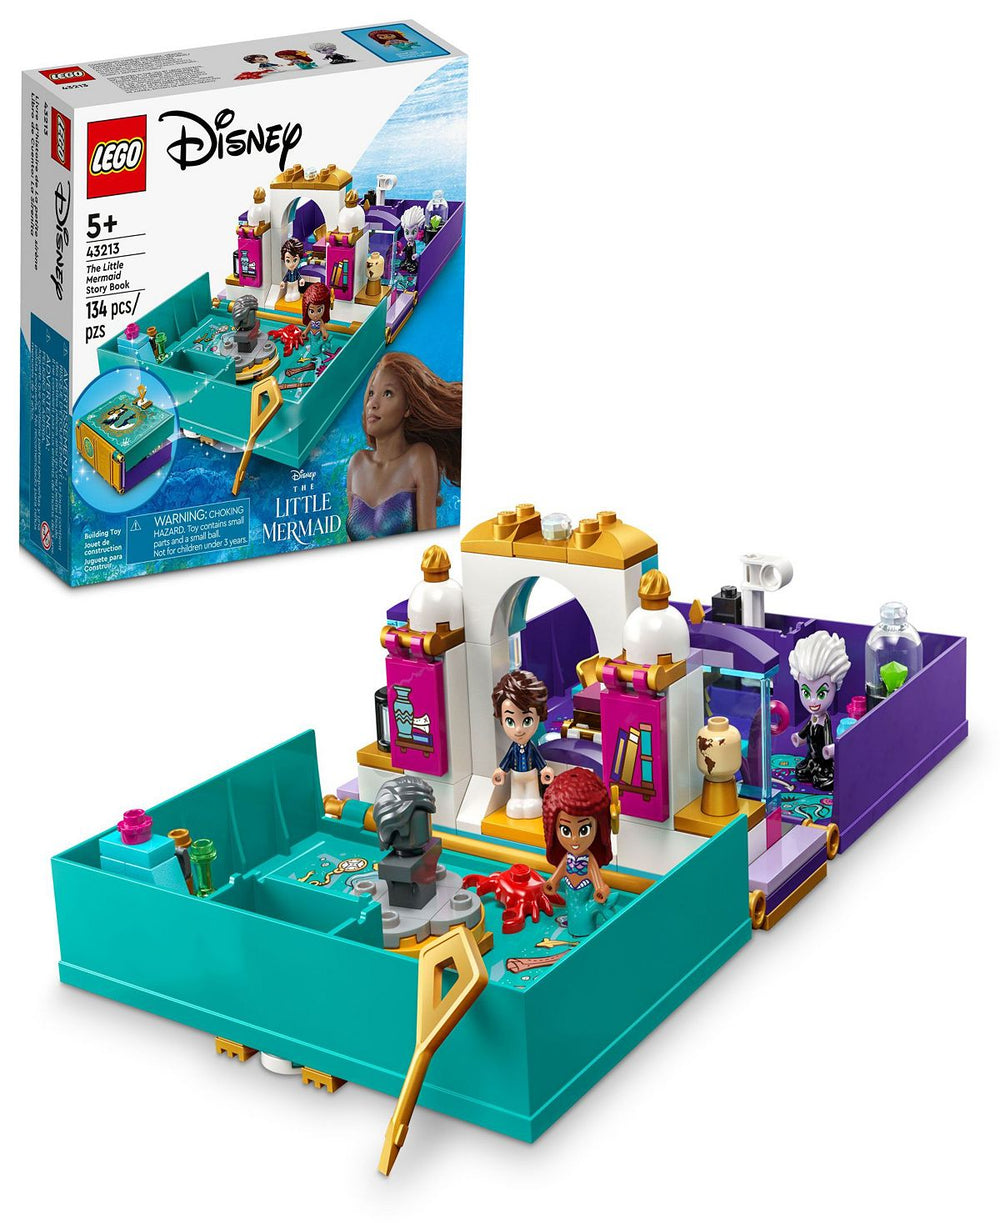 LEGO Disney Princess The Little Mermaid Story Book Building Set - 134 Pieces